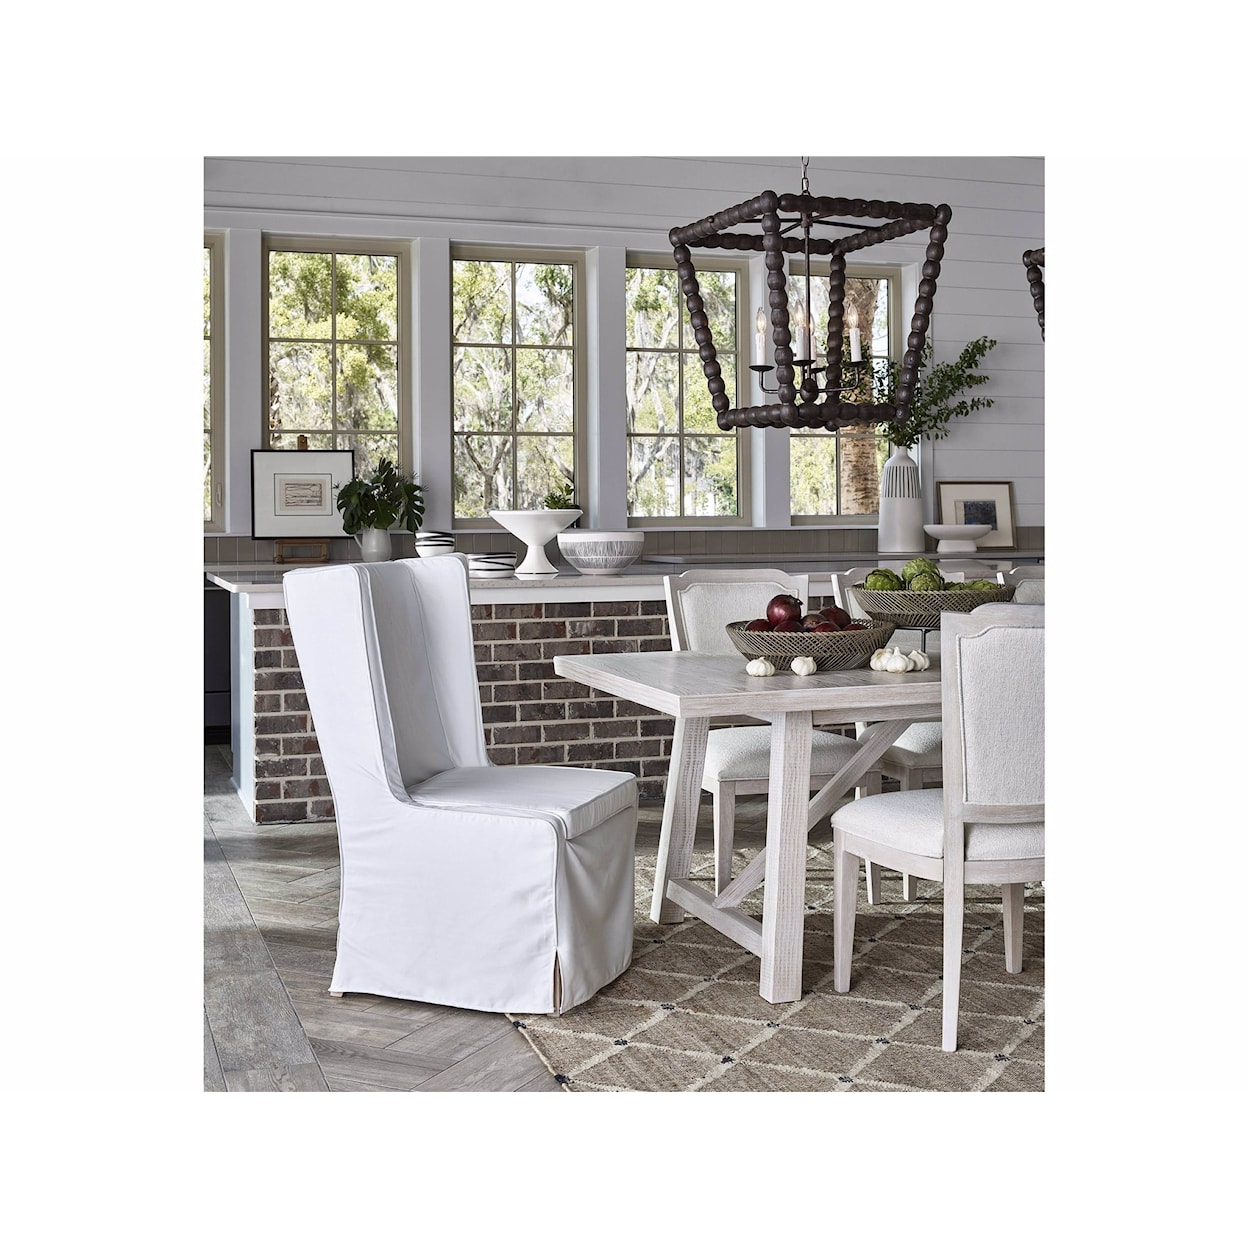 Universal Getaway Coastal Living Home Slip Cover Chair